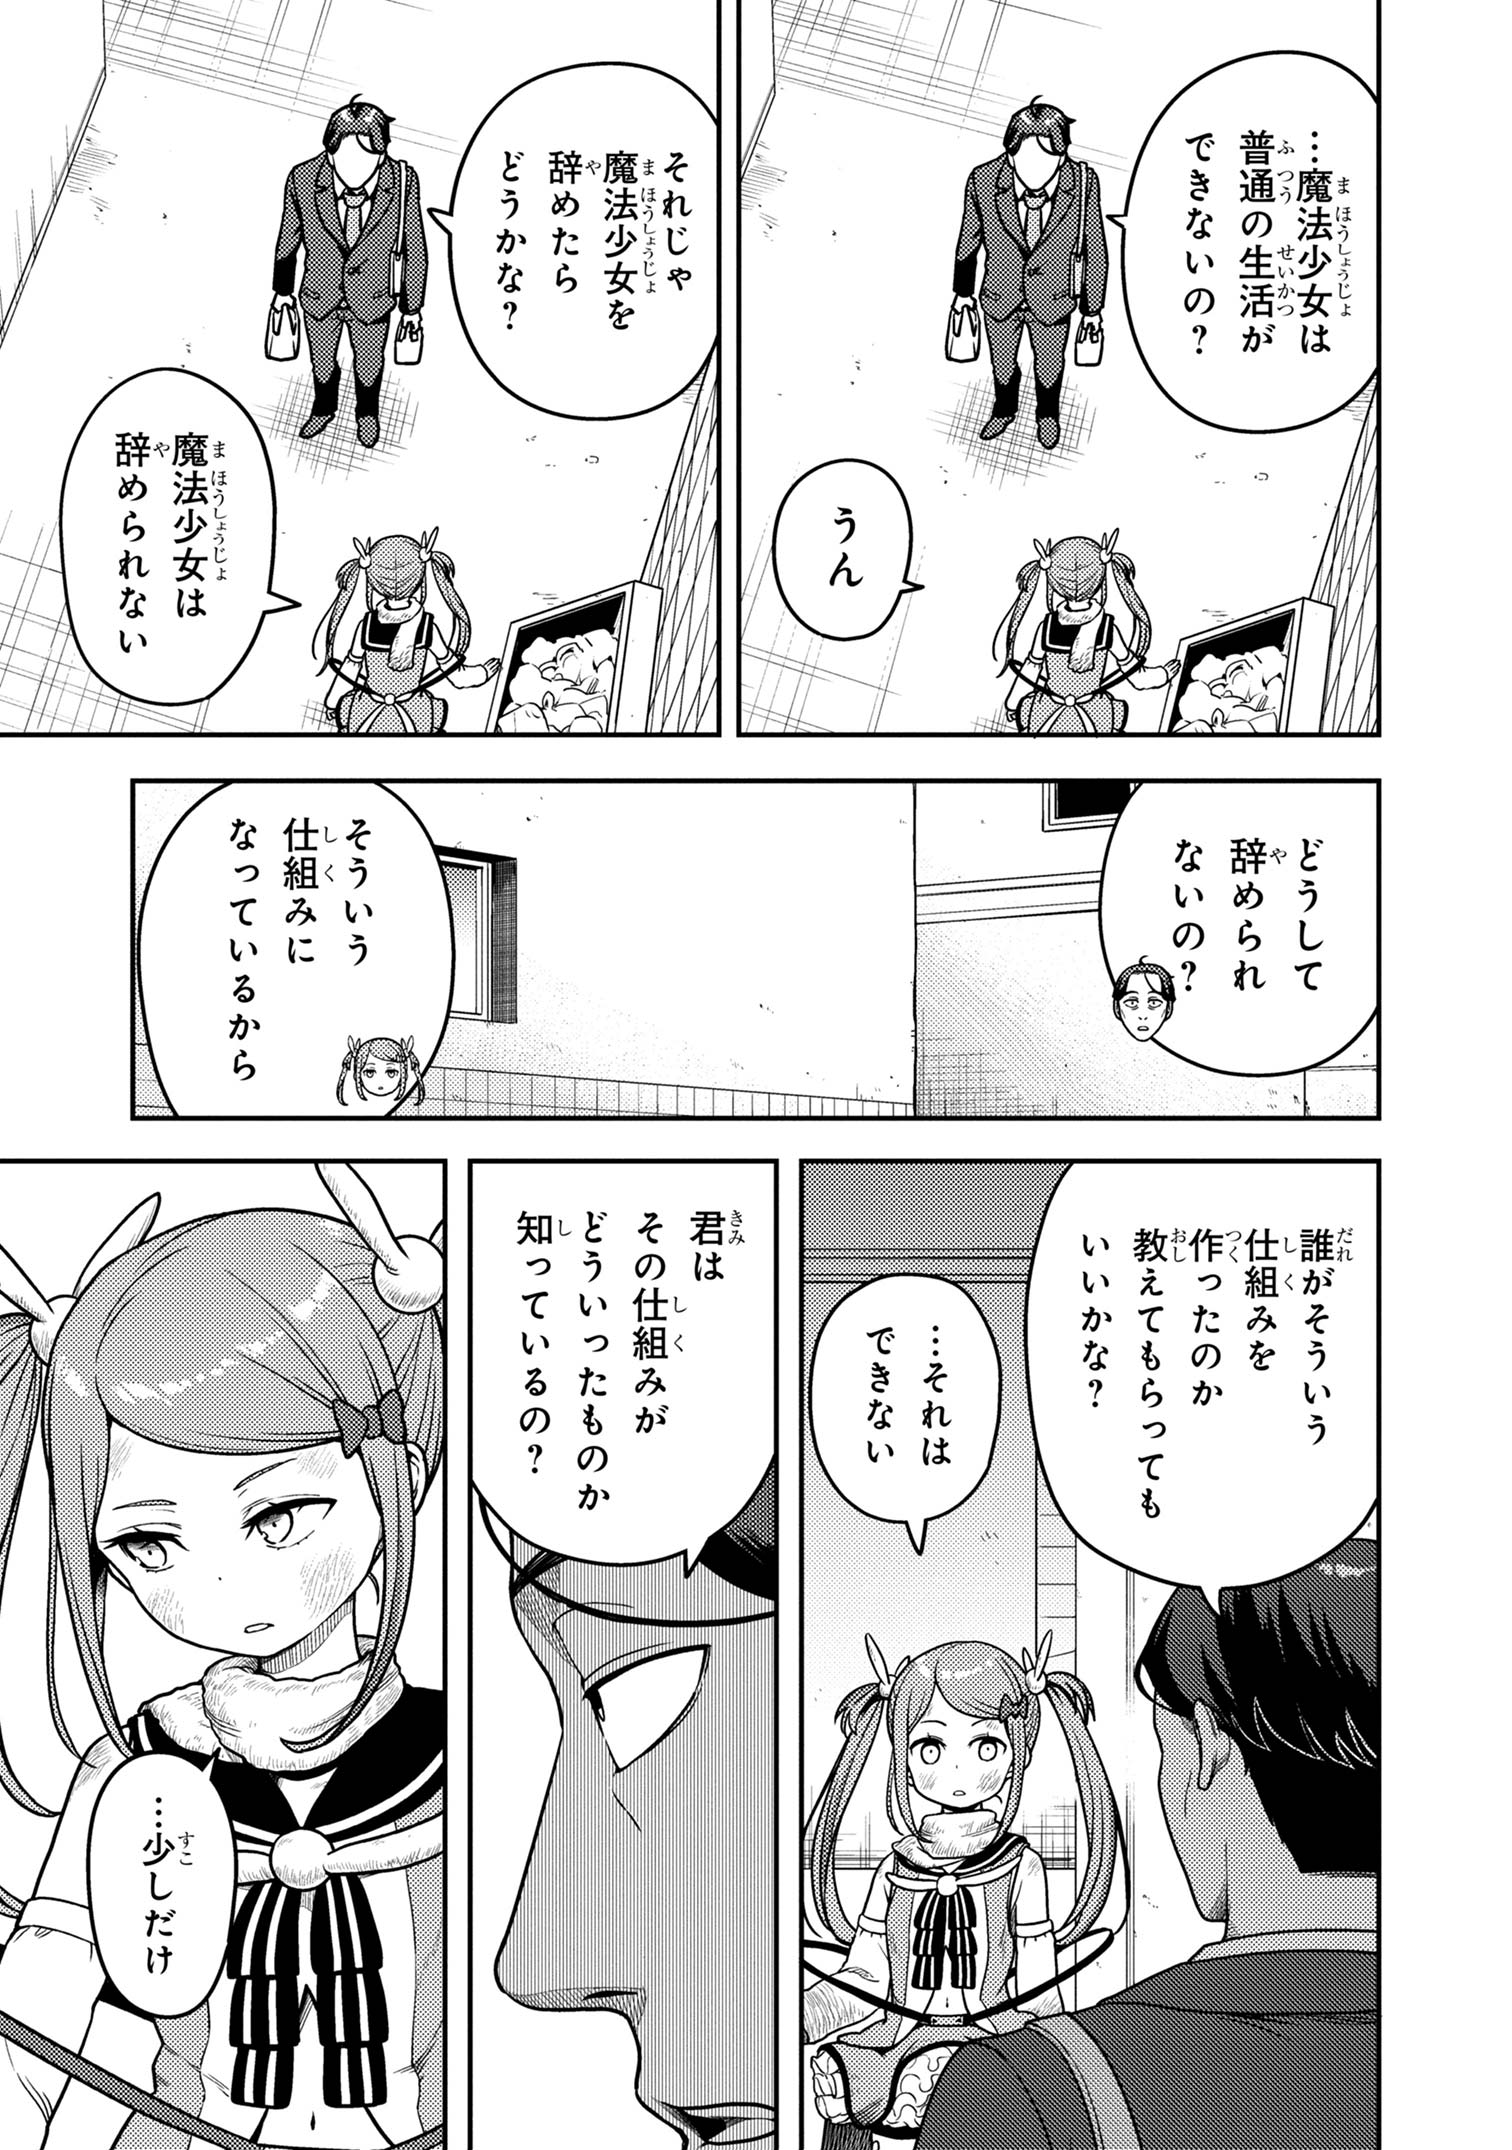 Sasaki to Pii-chan - Chapter 17.2 - Page 2